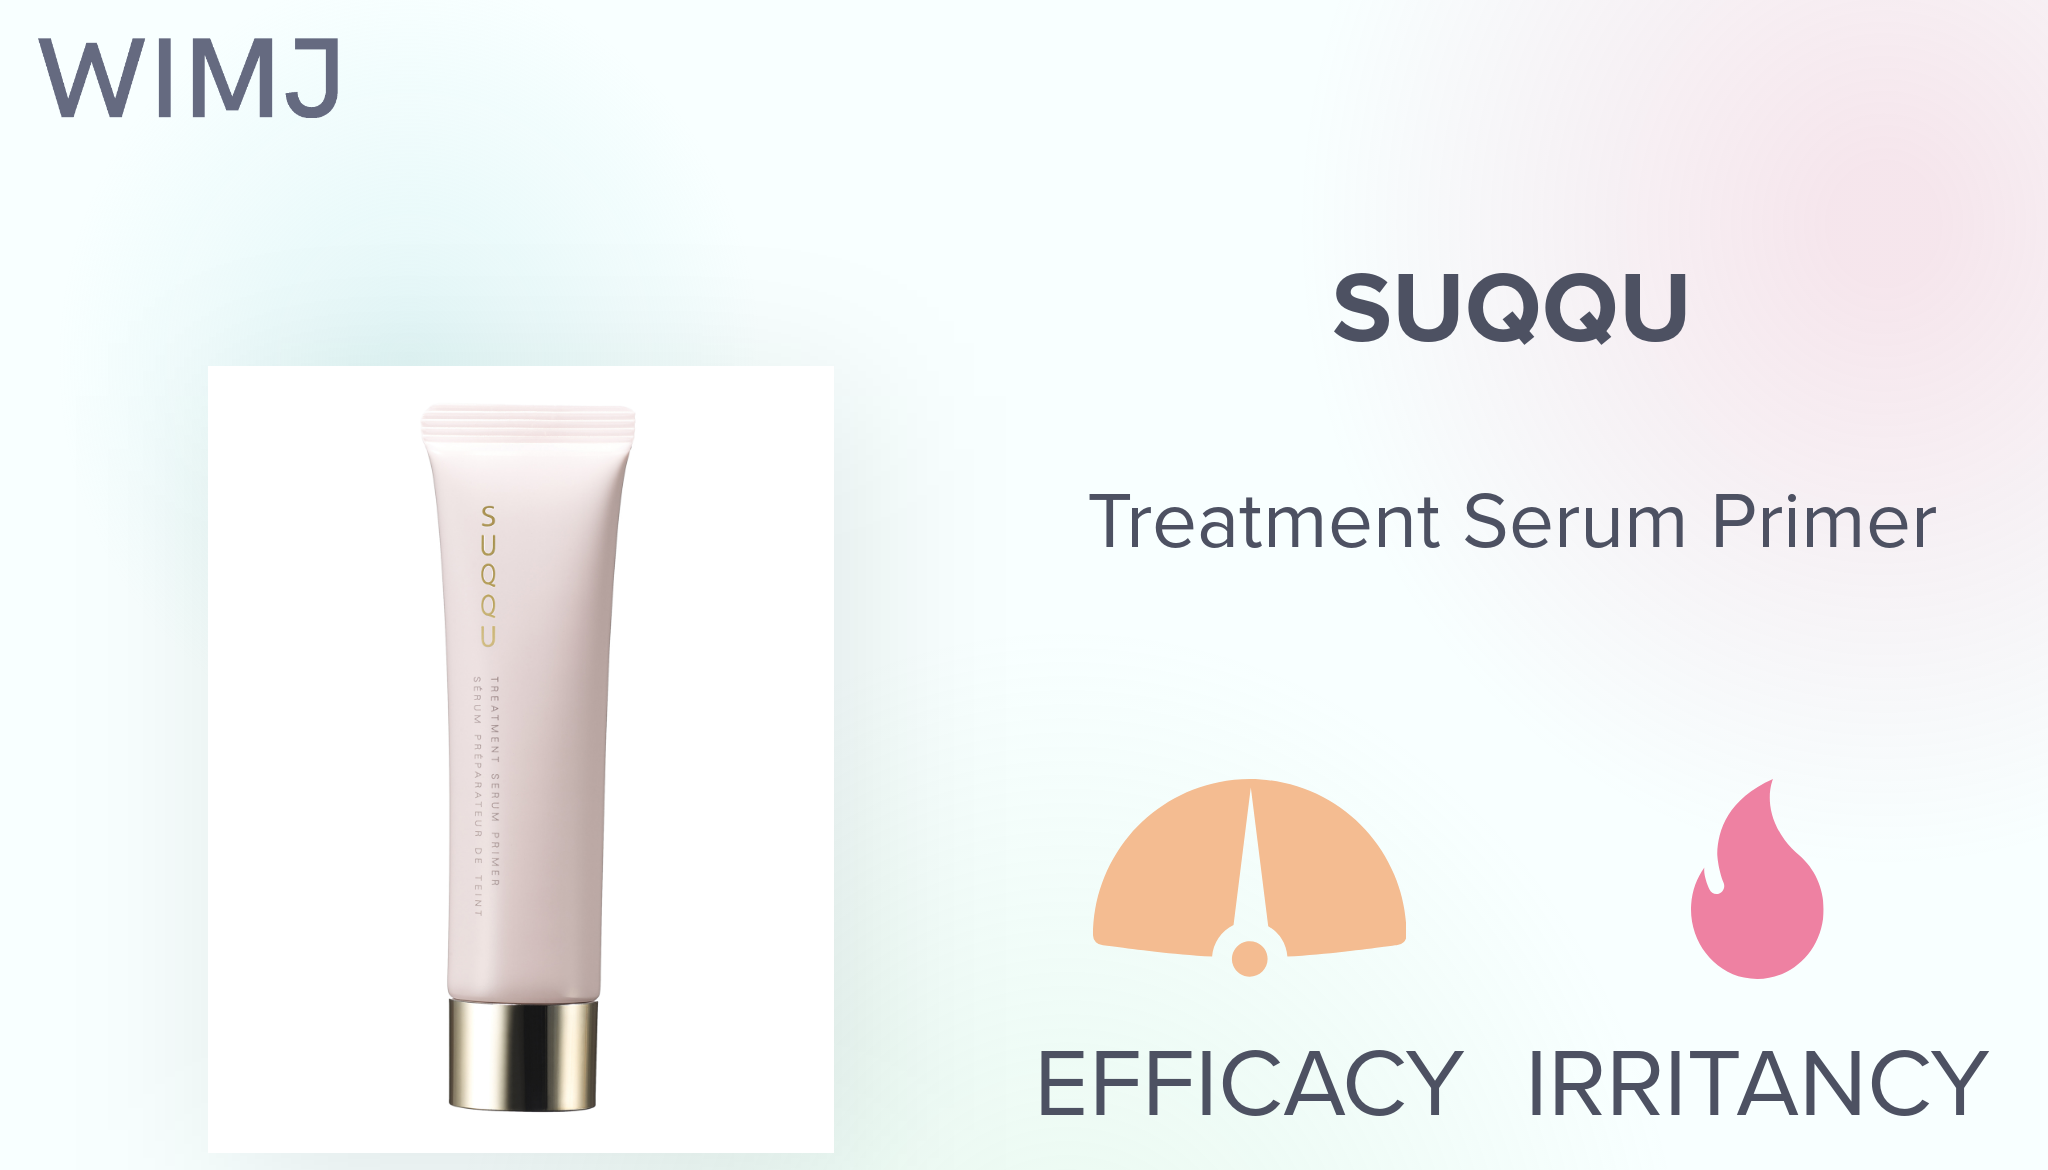 Review: SUQQU - Treatment Serum Primer - WIMJ